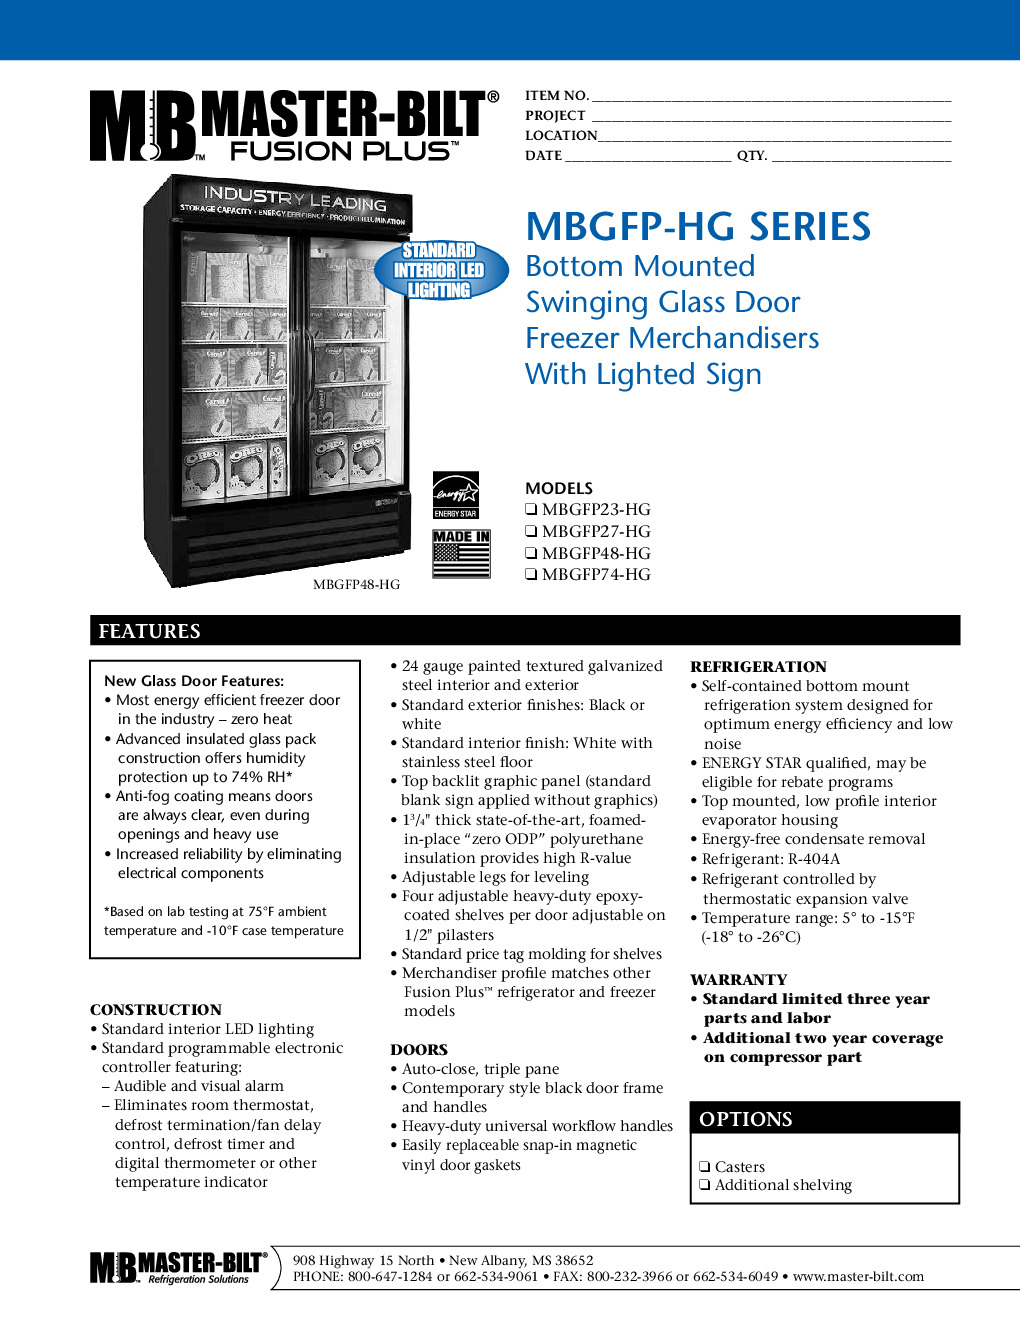 Master-Bilt MBGFP74-HG Merchandiser Freezer